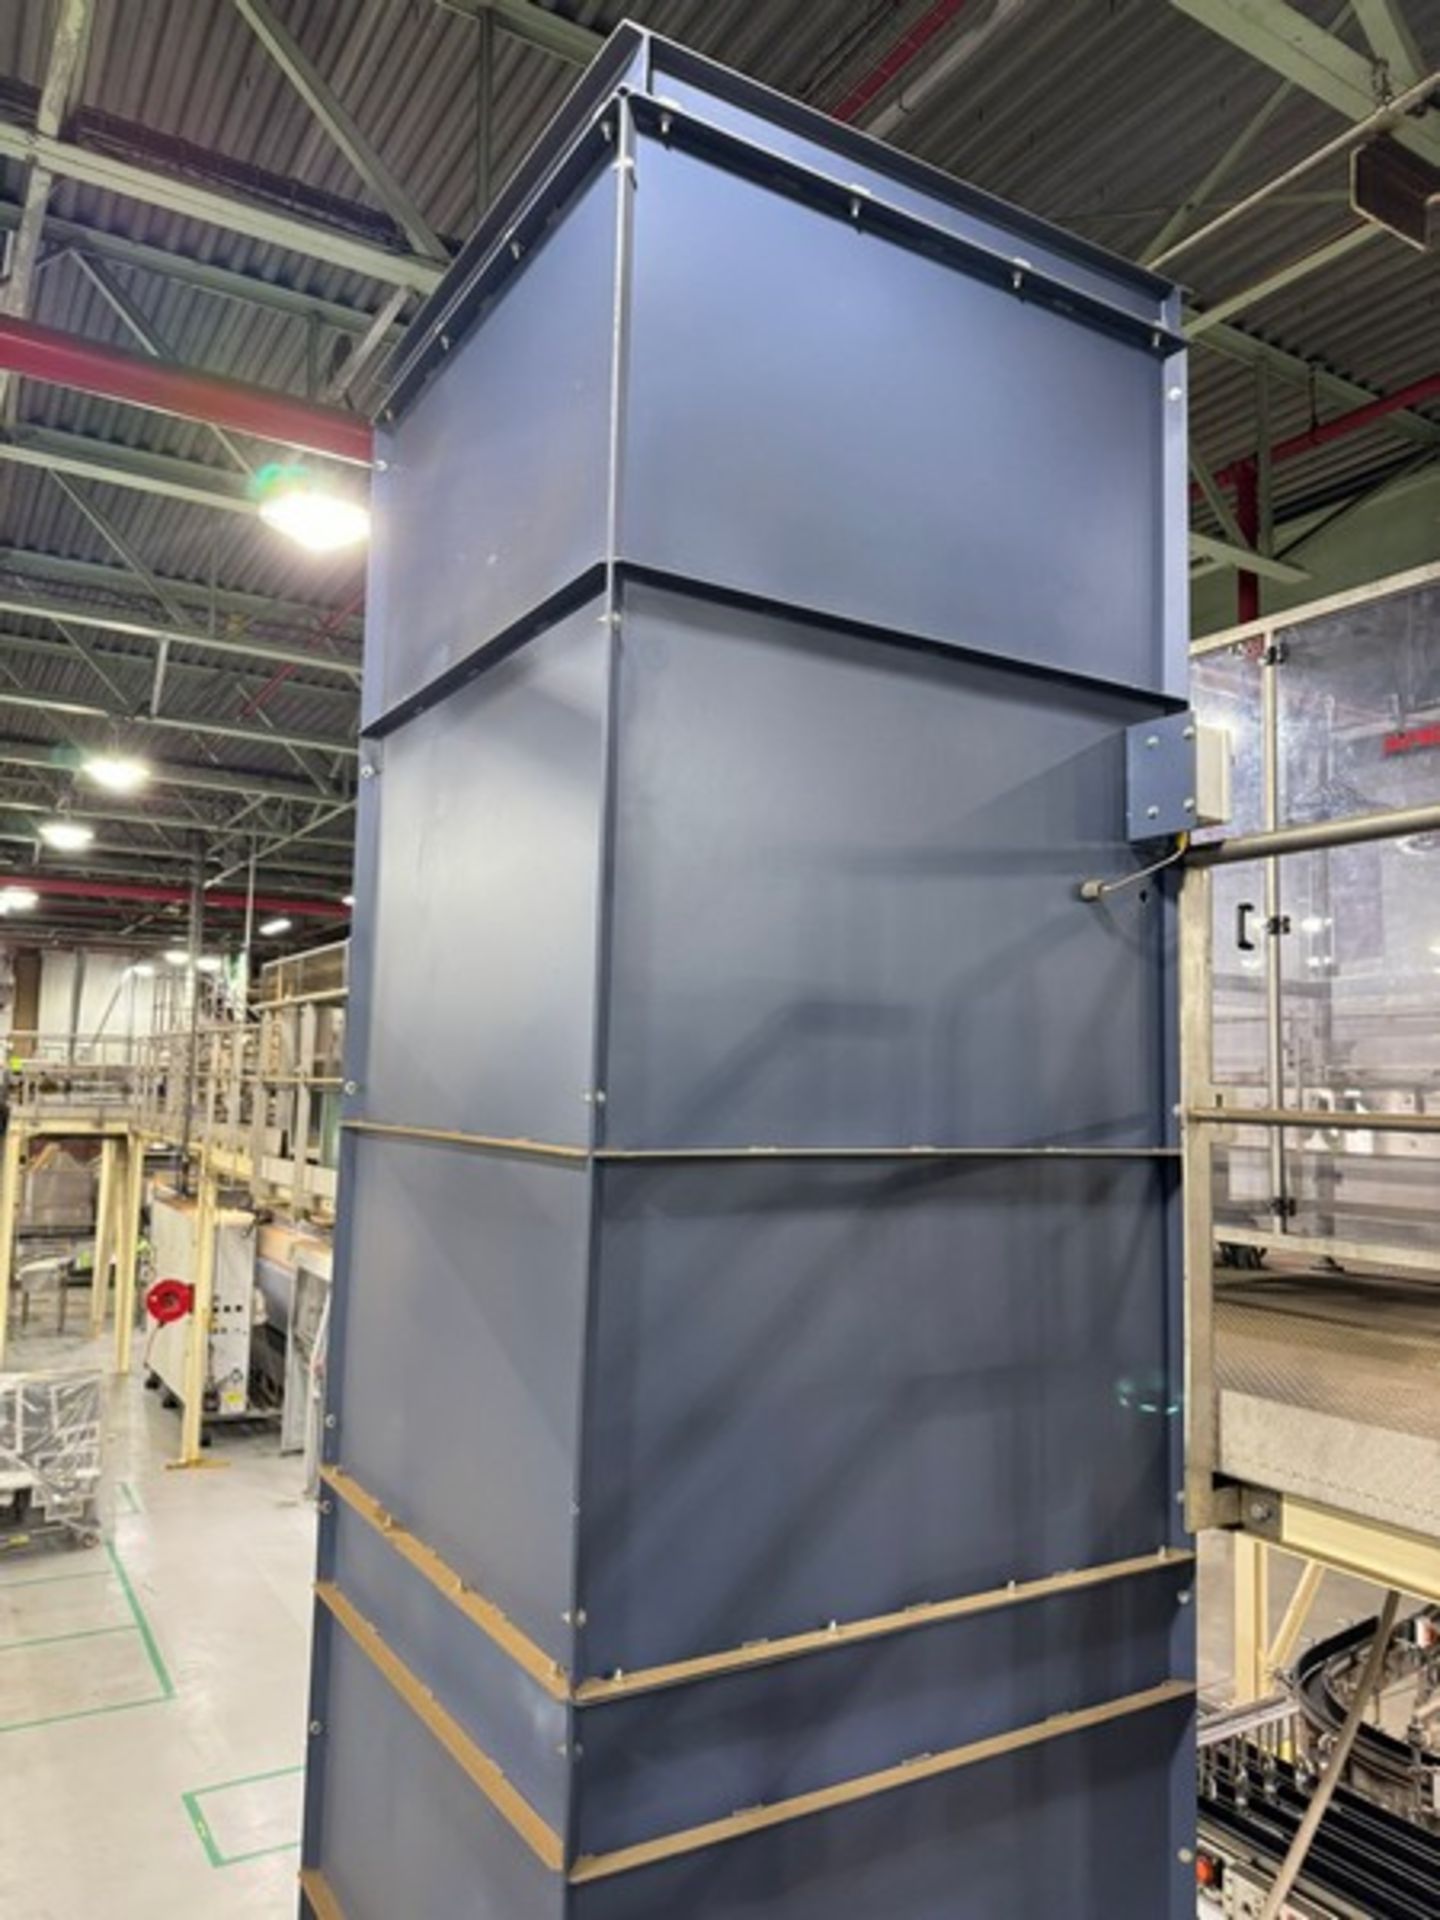 PFlow Industries Inc. 500 lbs. Capacity Elevator (LOCATED IN FREEHOLD, N.J.) (Simple Loading Fee - Image 8 of 8